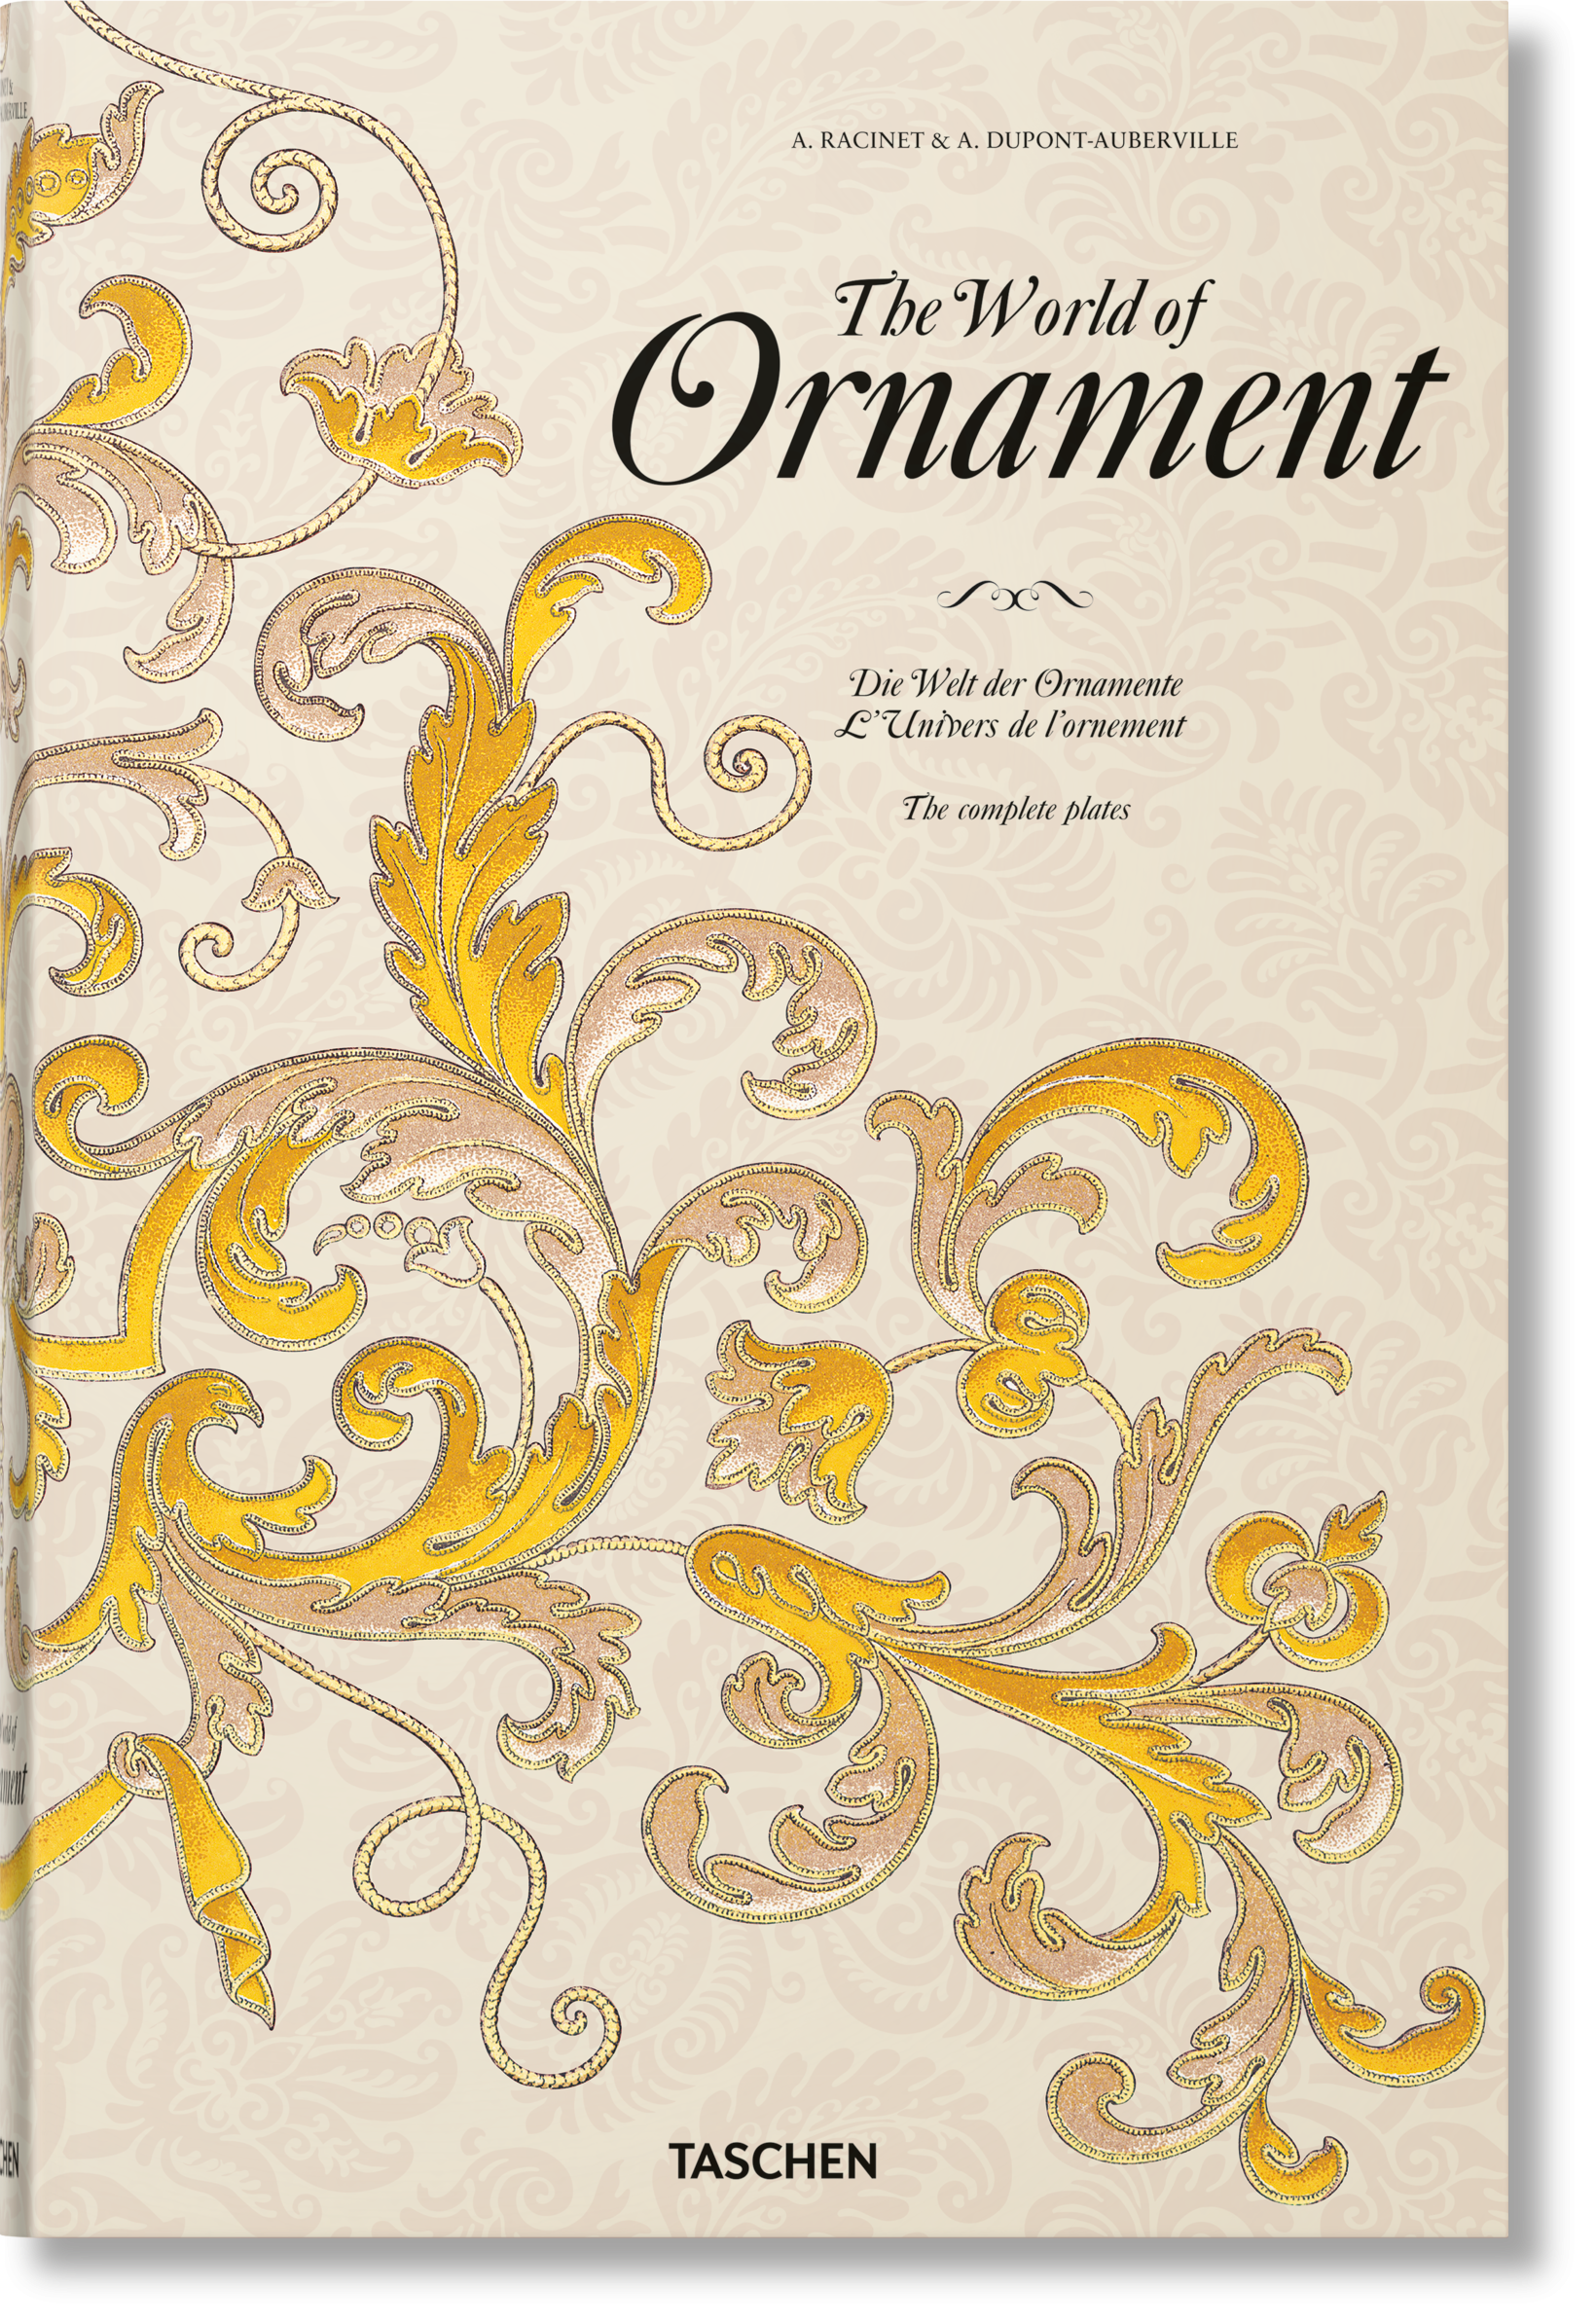 TASCHEN Books: The World of Ornament